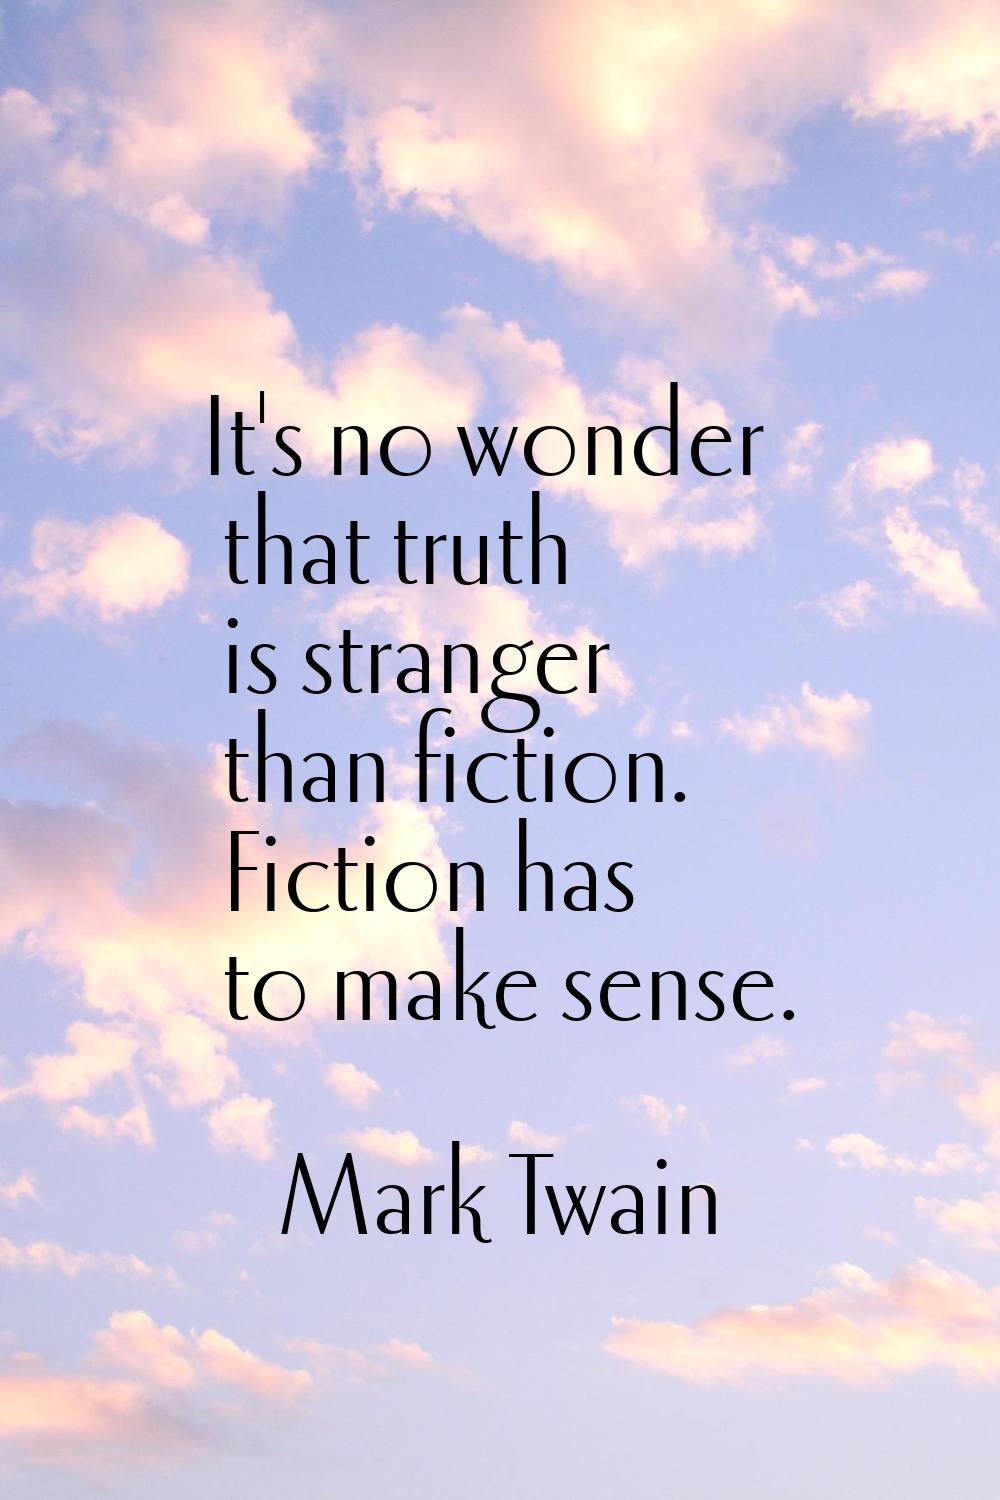 It's no wonder that truth is stranger than fiction. Fiction has to make sense.